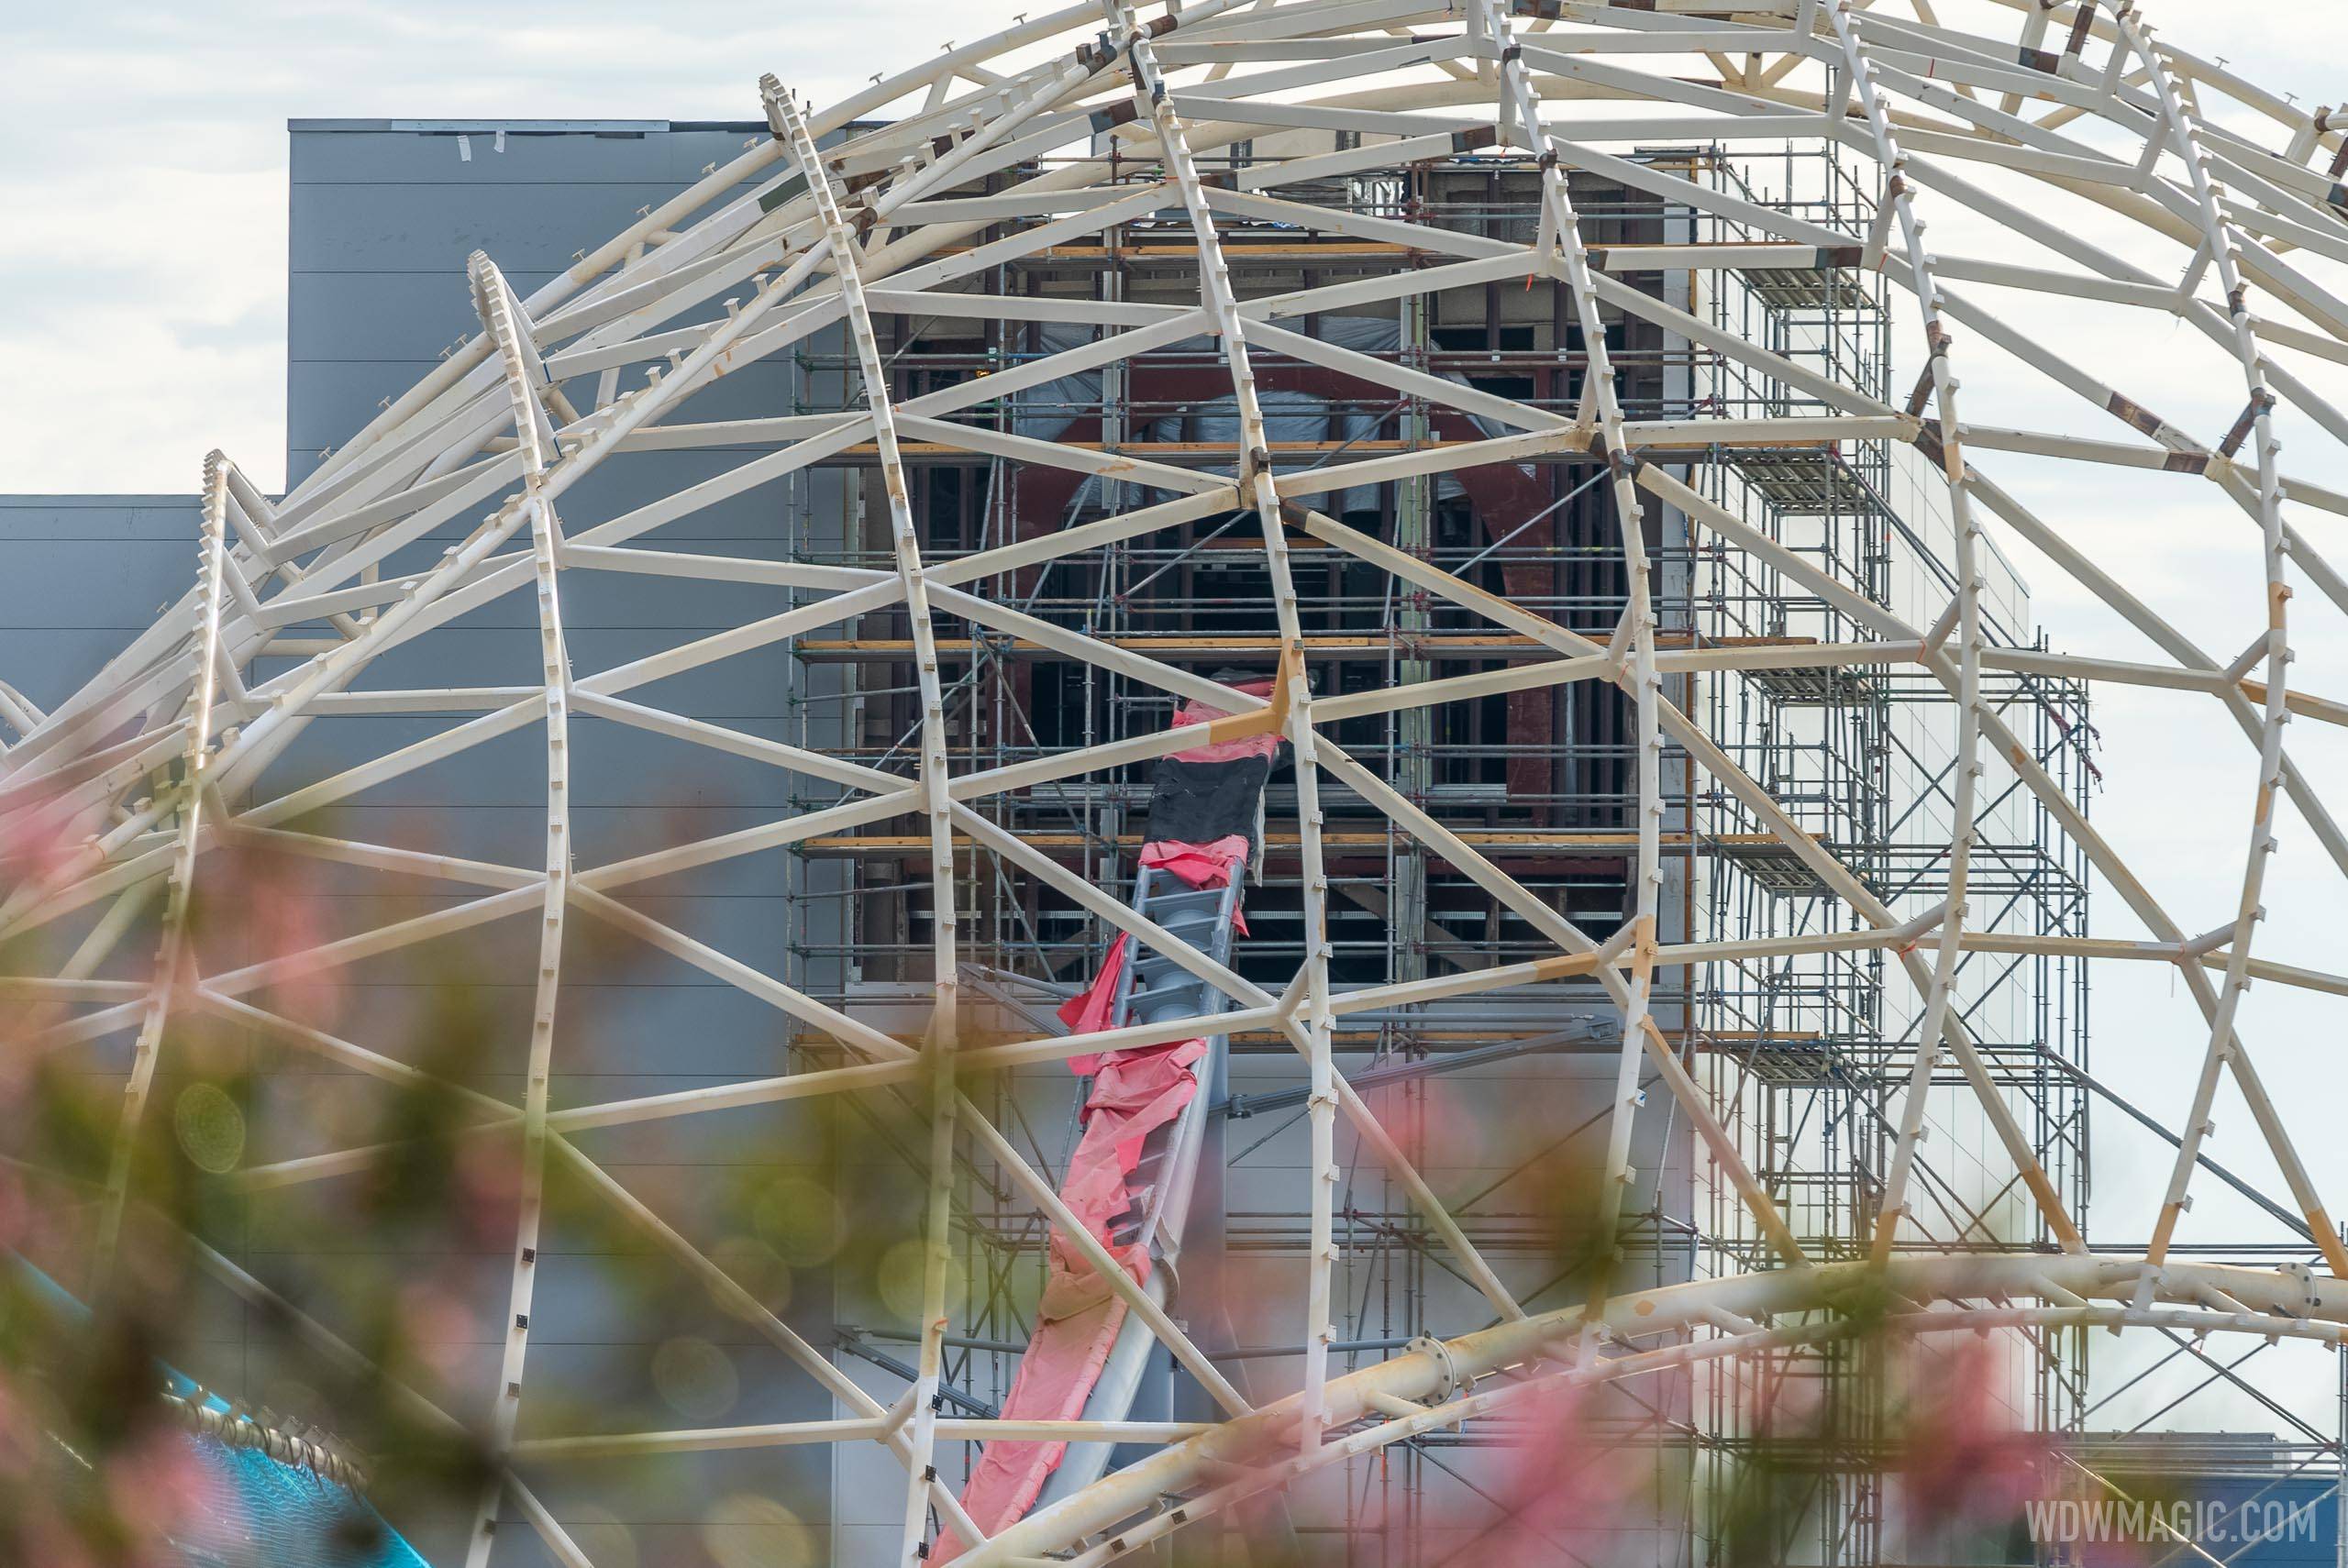 TRON Lightcycle Run construction at Walt Disney World